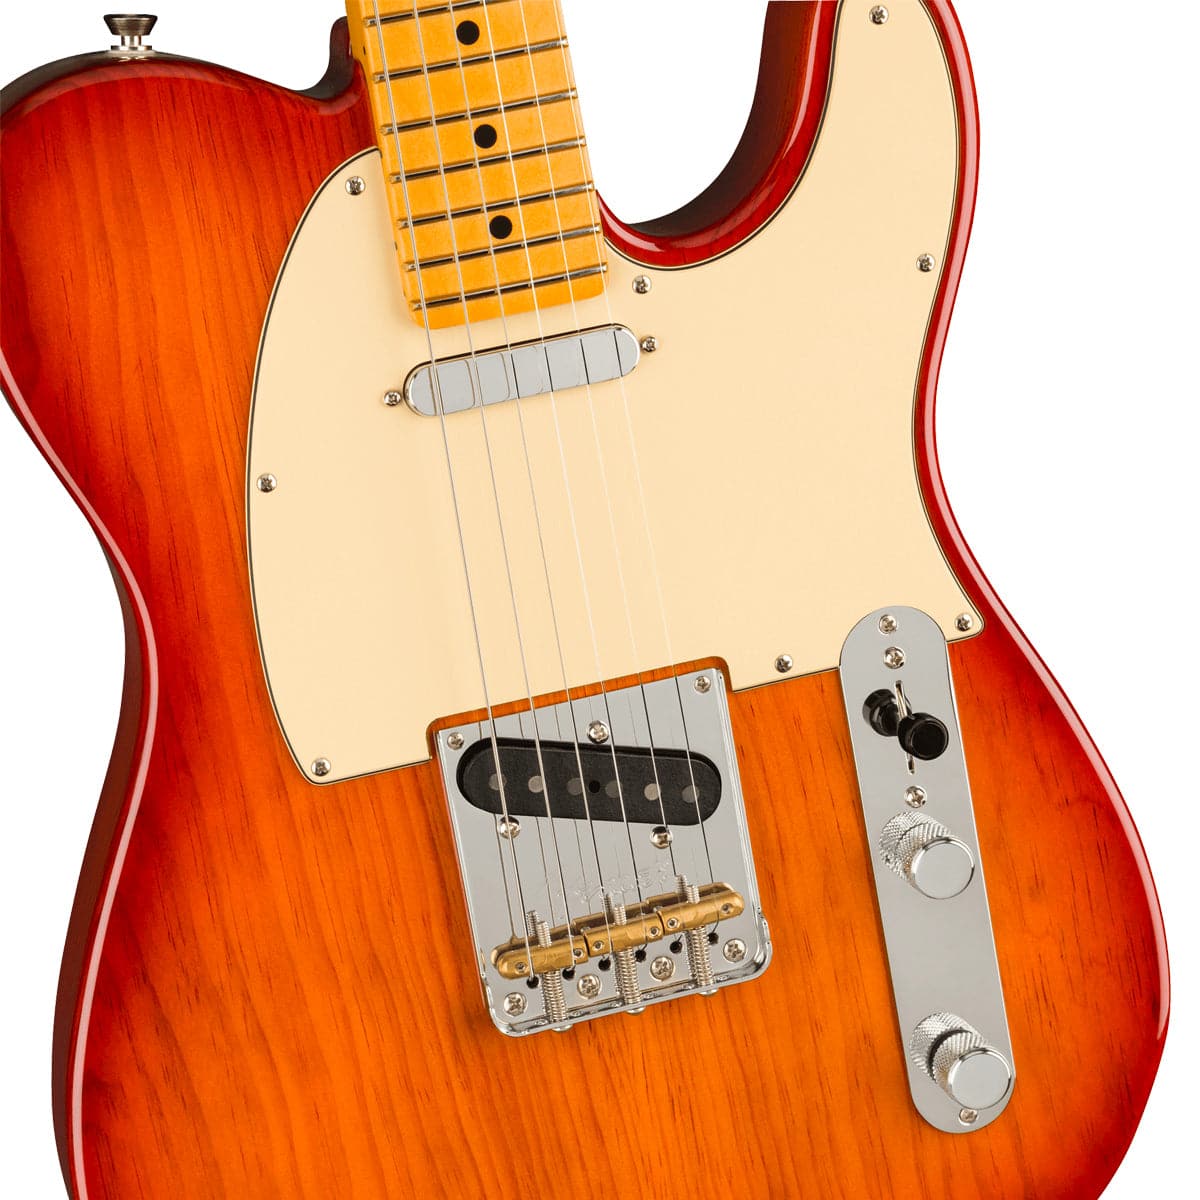 Fender American Professional II Telecaster - Maple Fingerboard - Sienna Sunburst